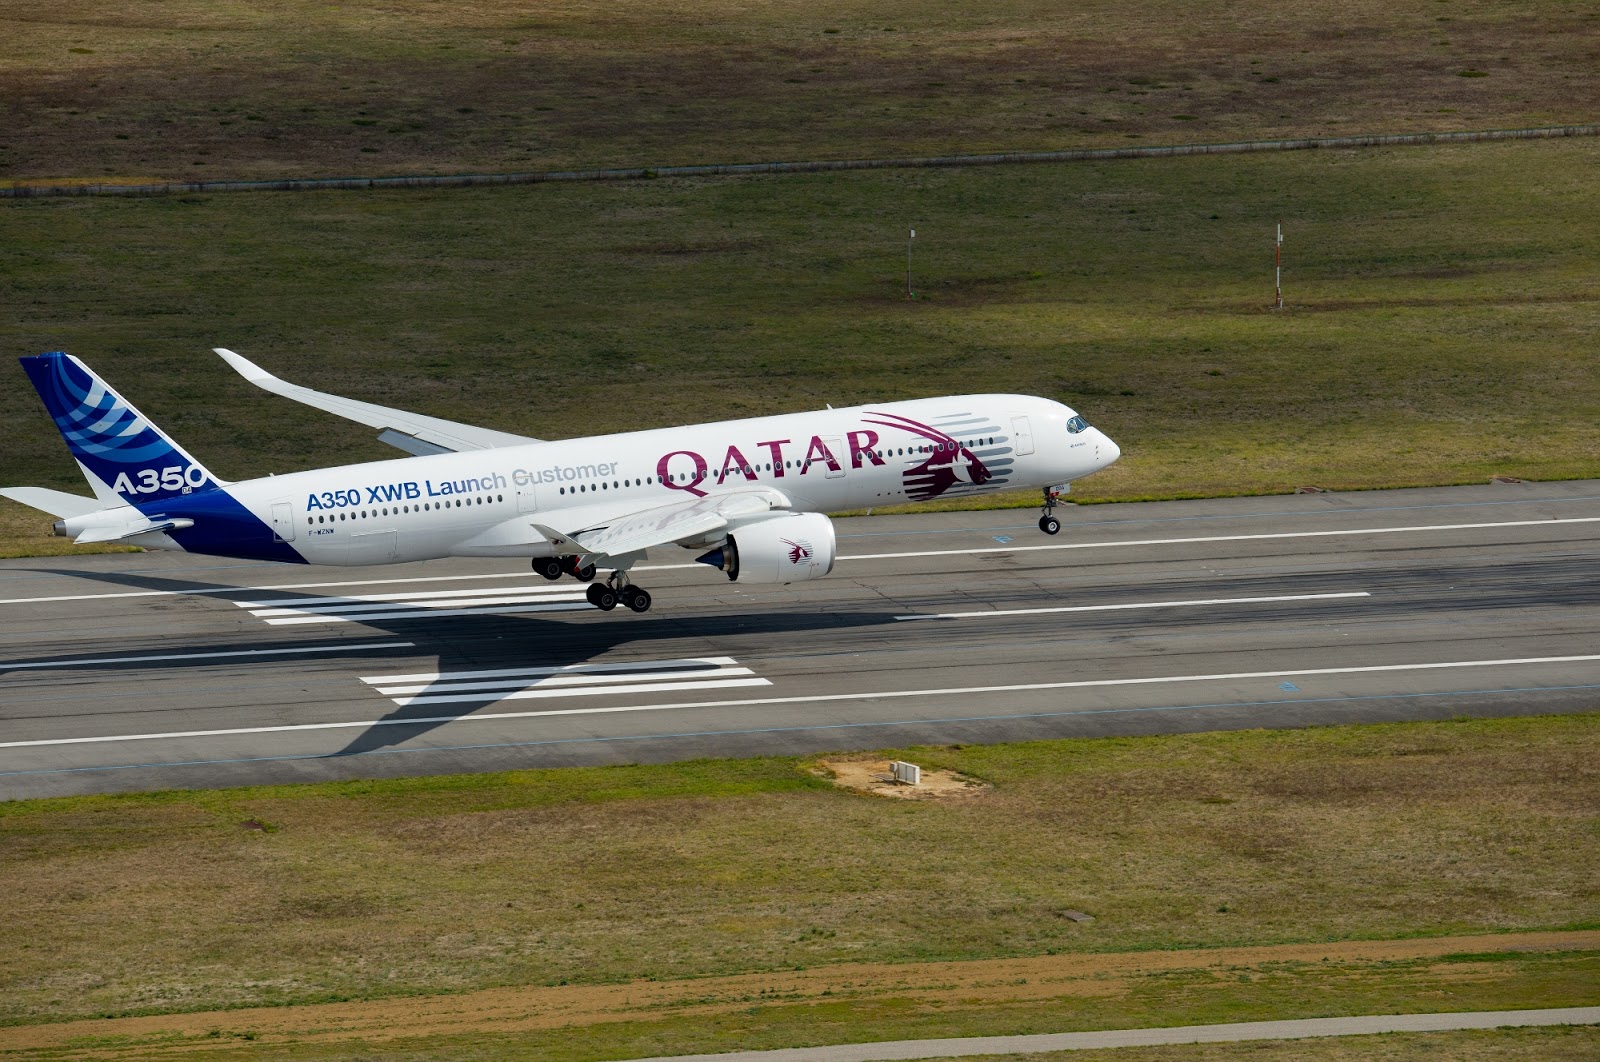  Qatar  Airways  Airbus A350 900 XWB First Flight in Livery  